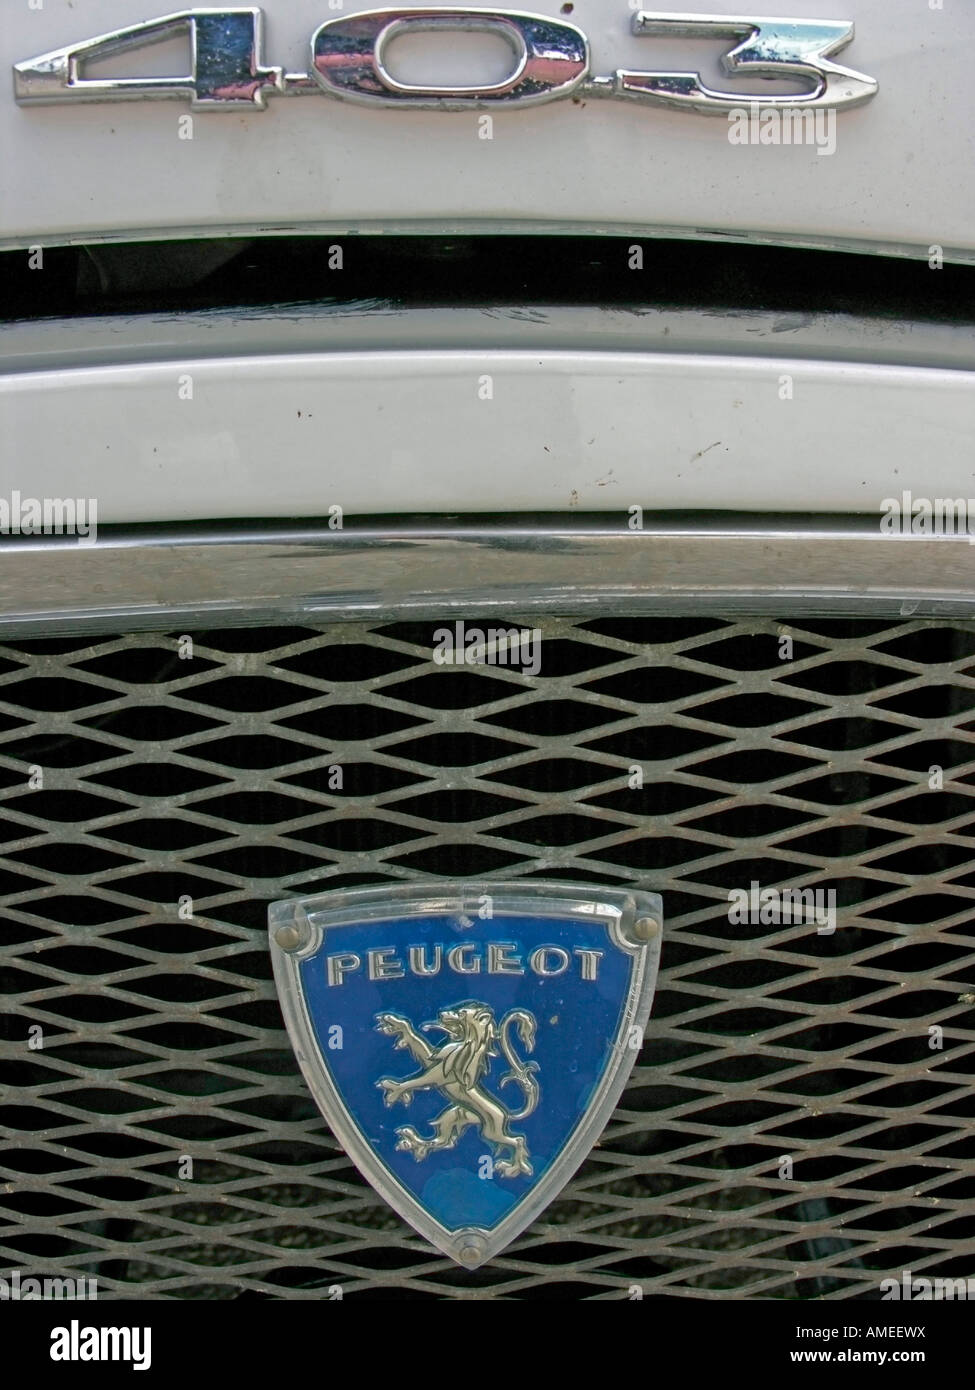 Peugeot Auto-Logo, Peugeot-Emblem vor Kühlergrill, Detailansicht, Altauto,  Schrottplatz, Metall-Recycling, Recycling von Altmetall, Metall  Stockfotografie - Alamy